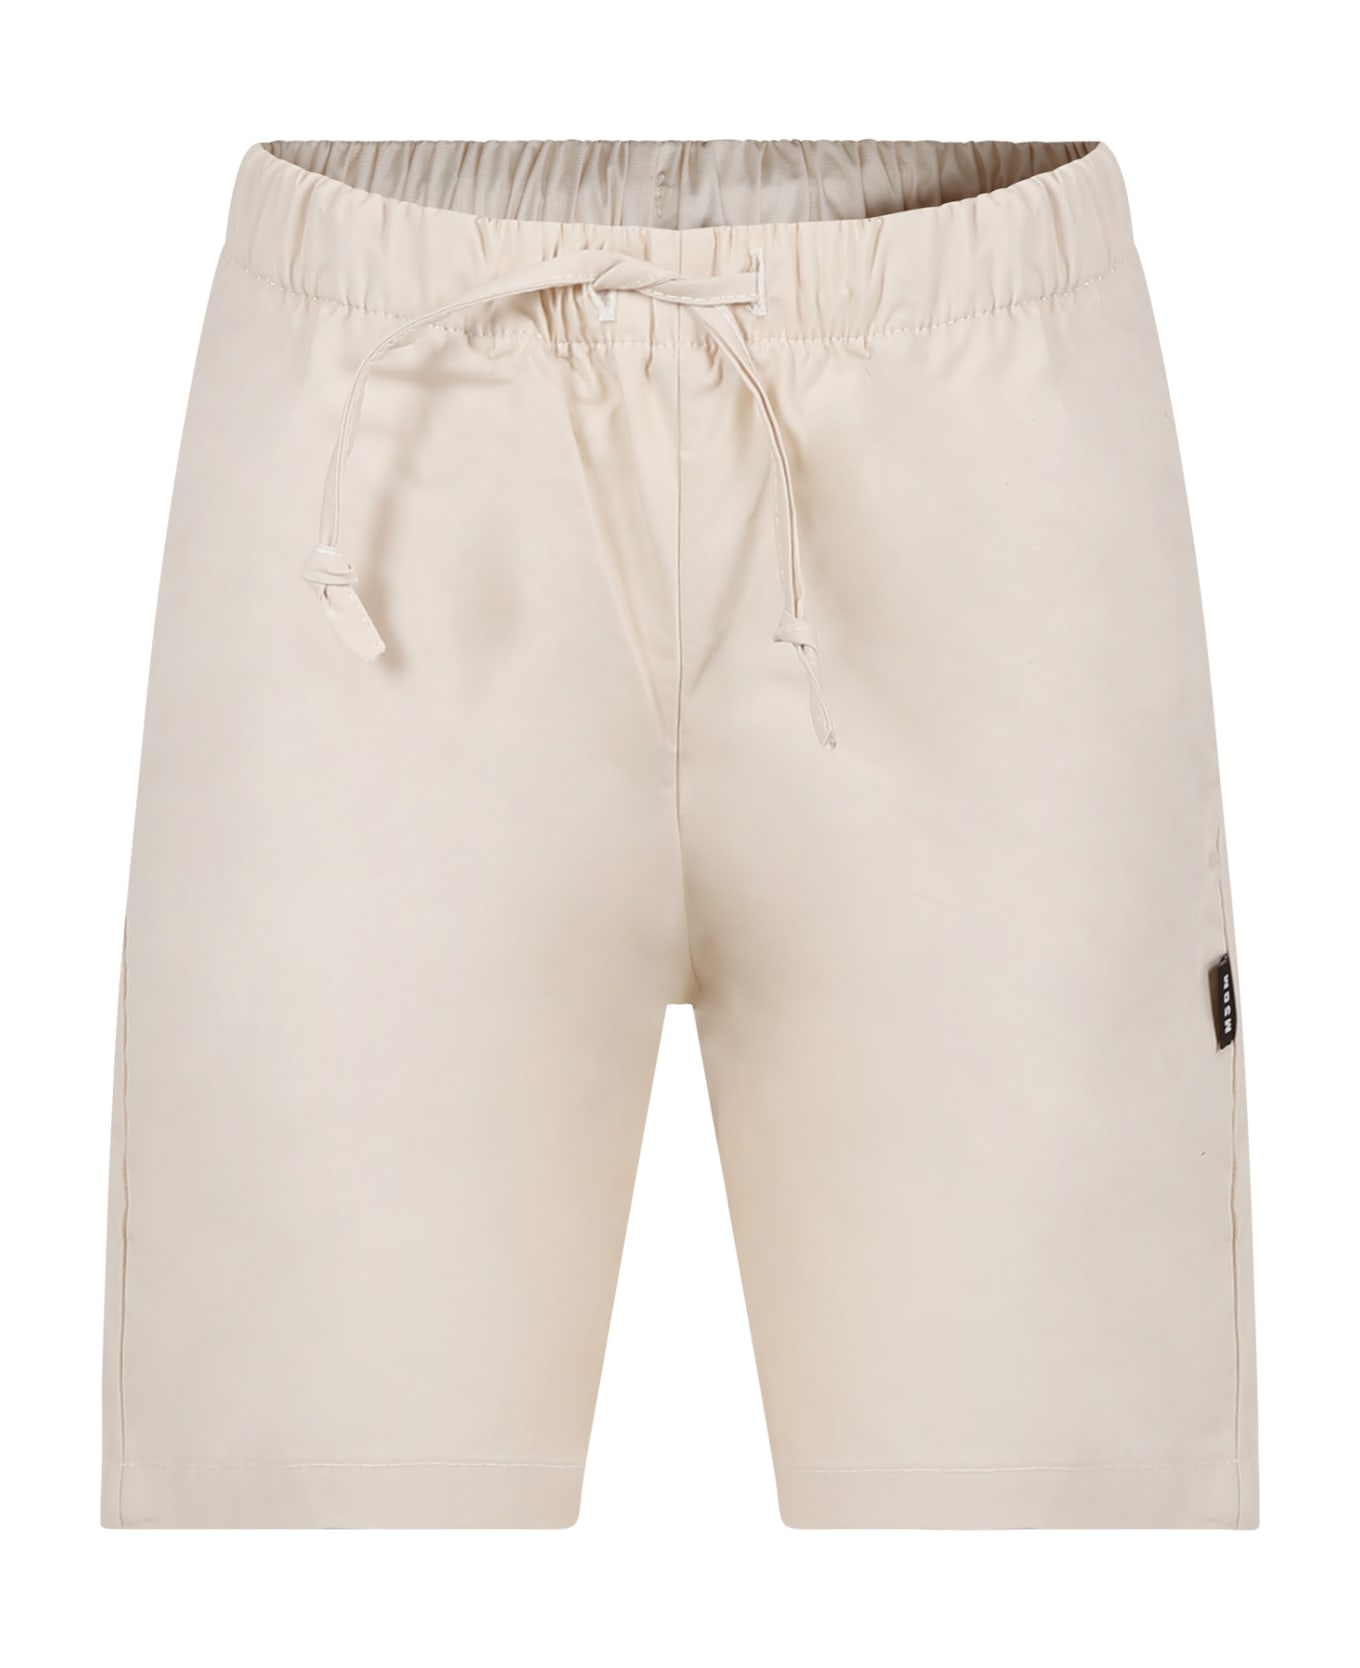 MSGM Ivory Shorts For Boy With Logo - Ivory ボトムス